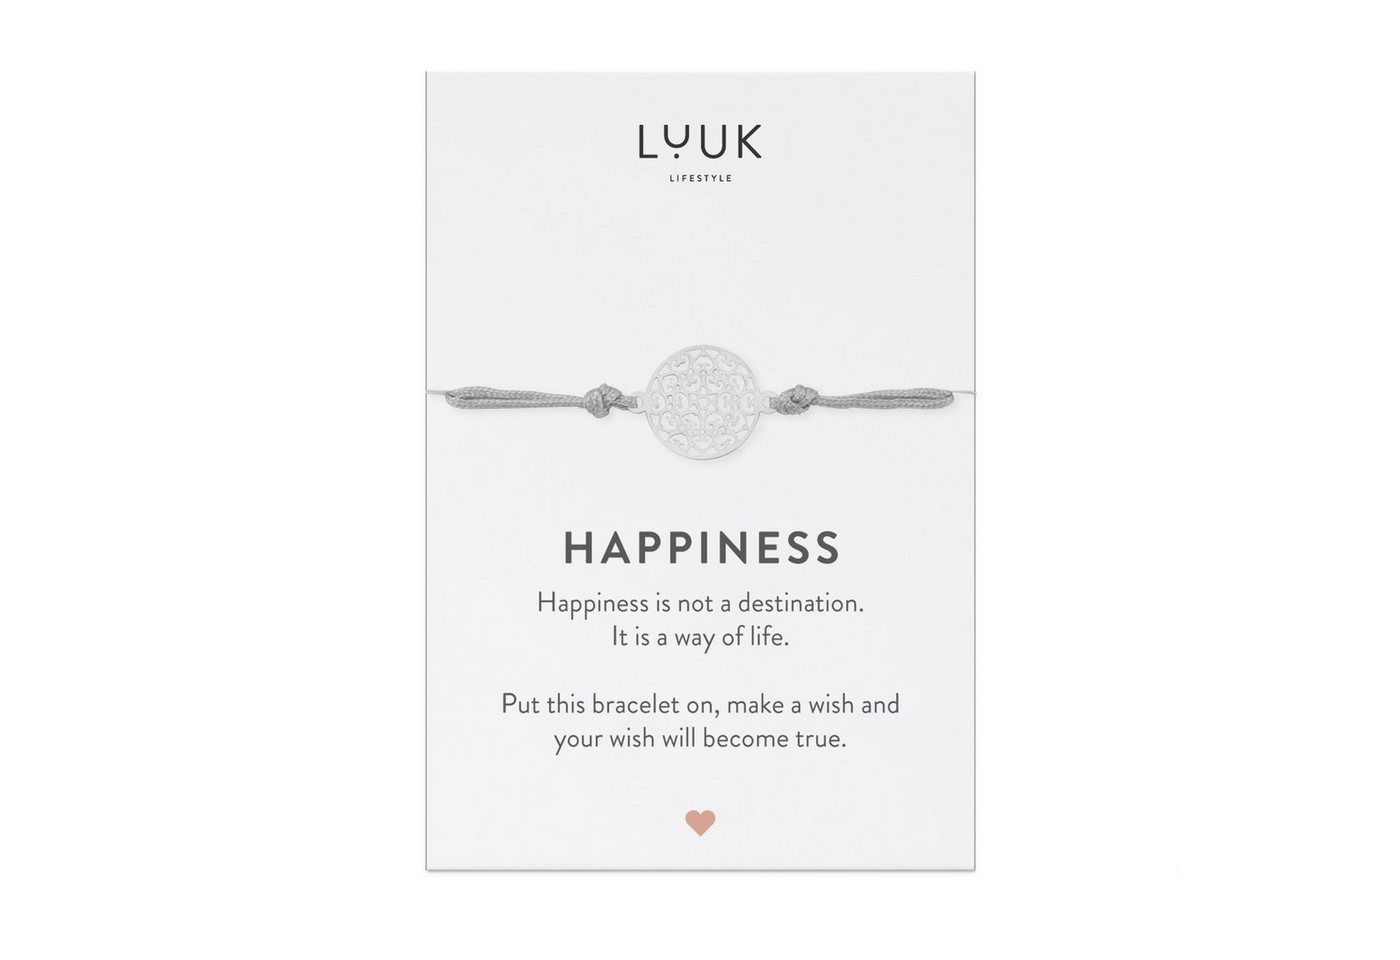 LUUK LIFESTYLE Freundschaftsarmband Lebensblume, handmade, mit Happiness Spruchkarte von LUUK LIFESTYLE